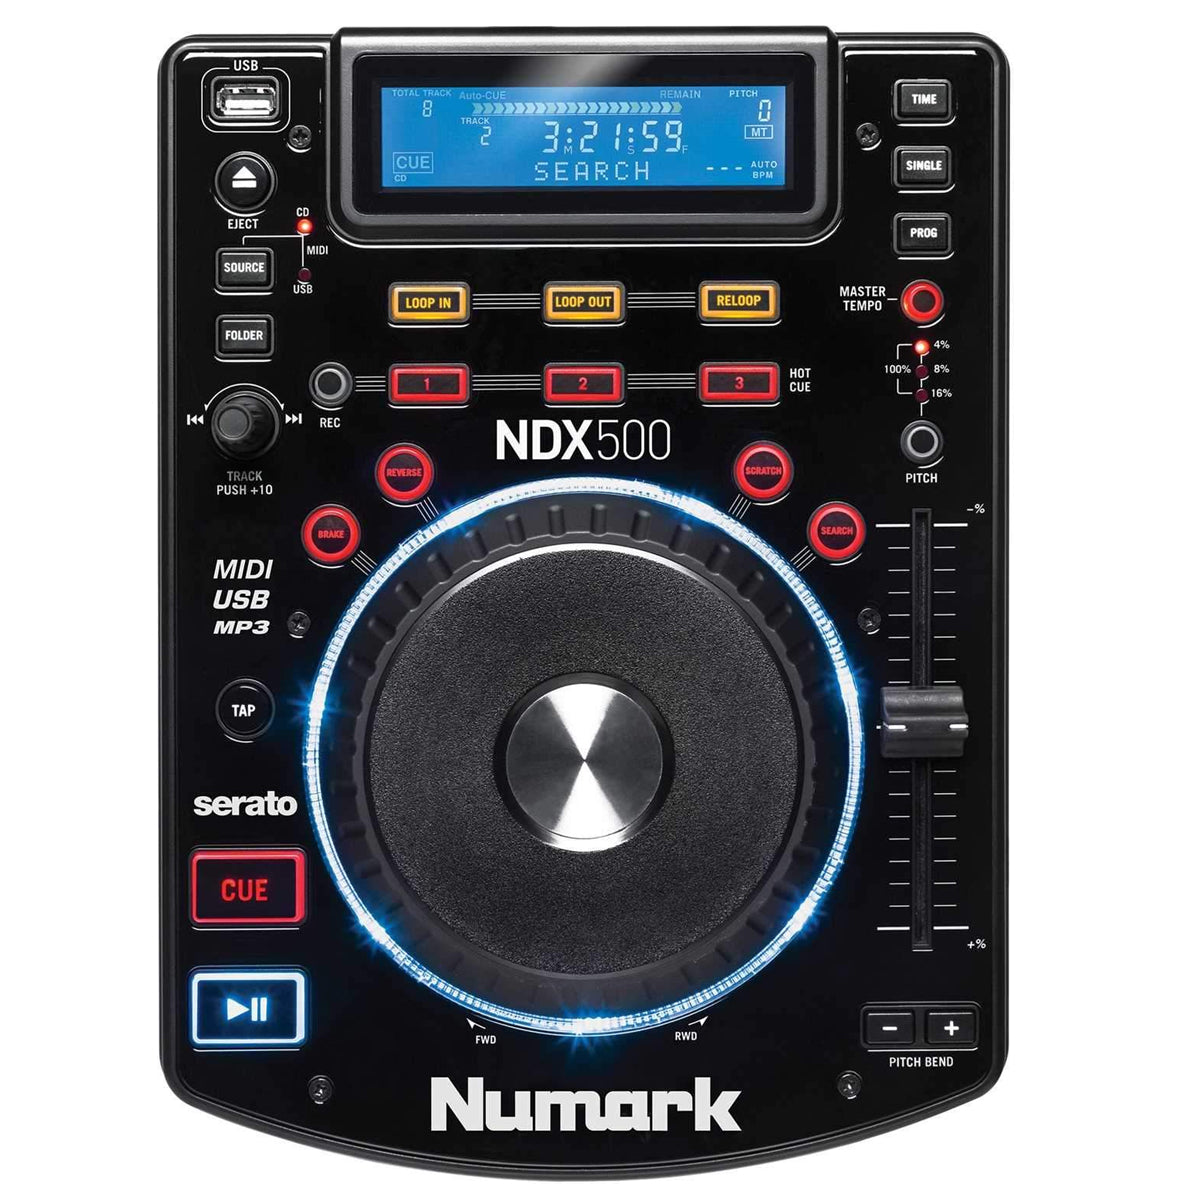 Numark NDX500 Table Top CD Player